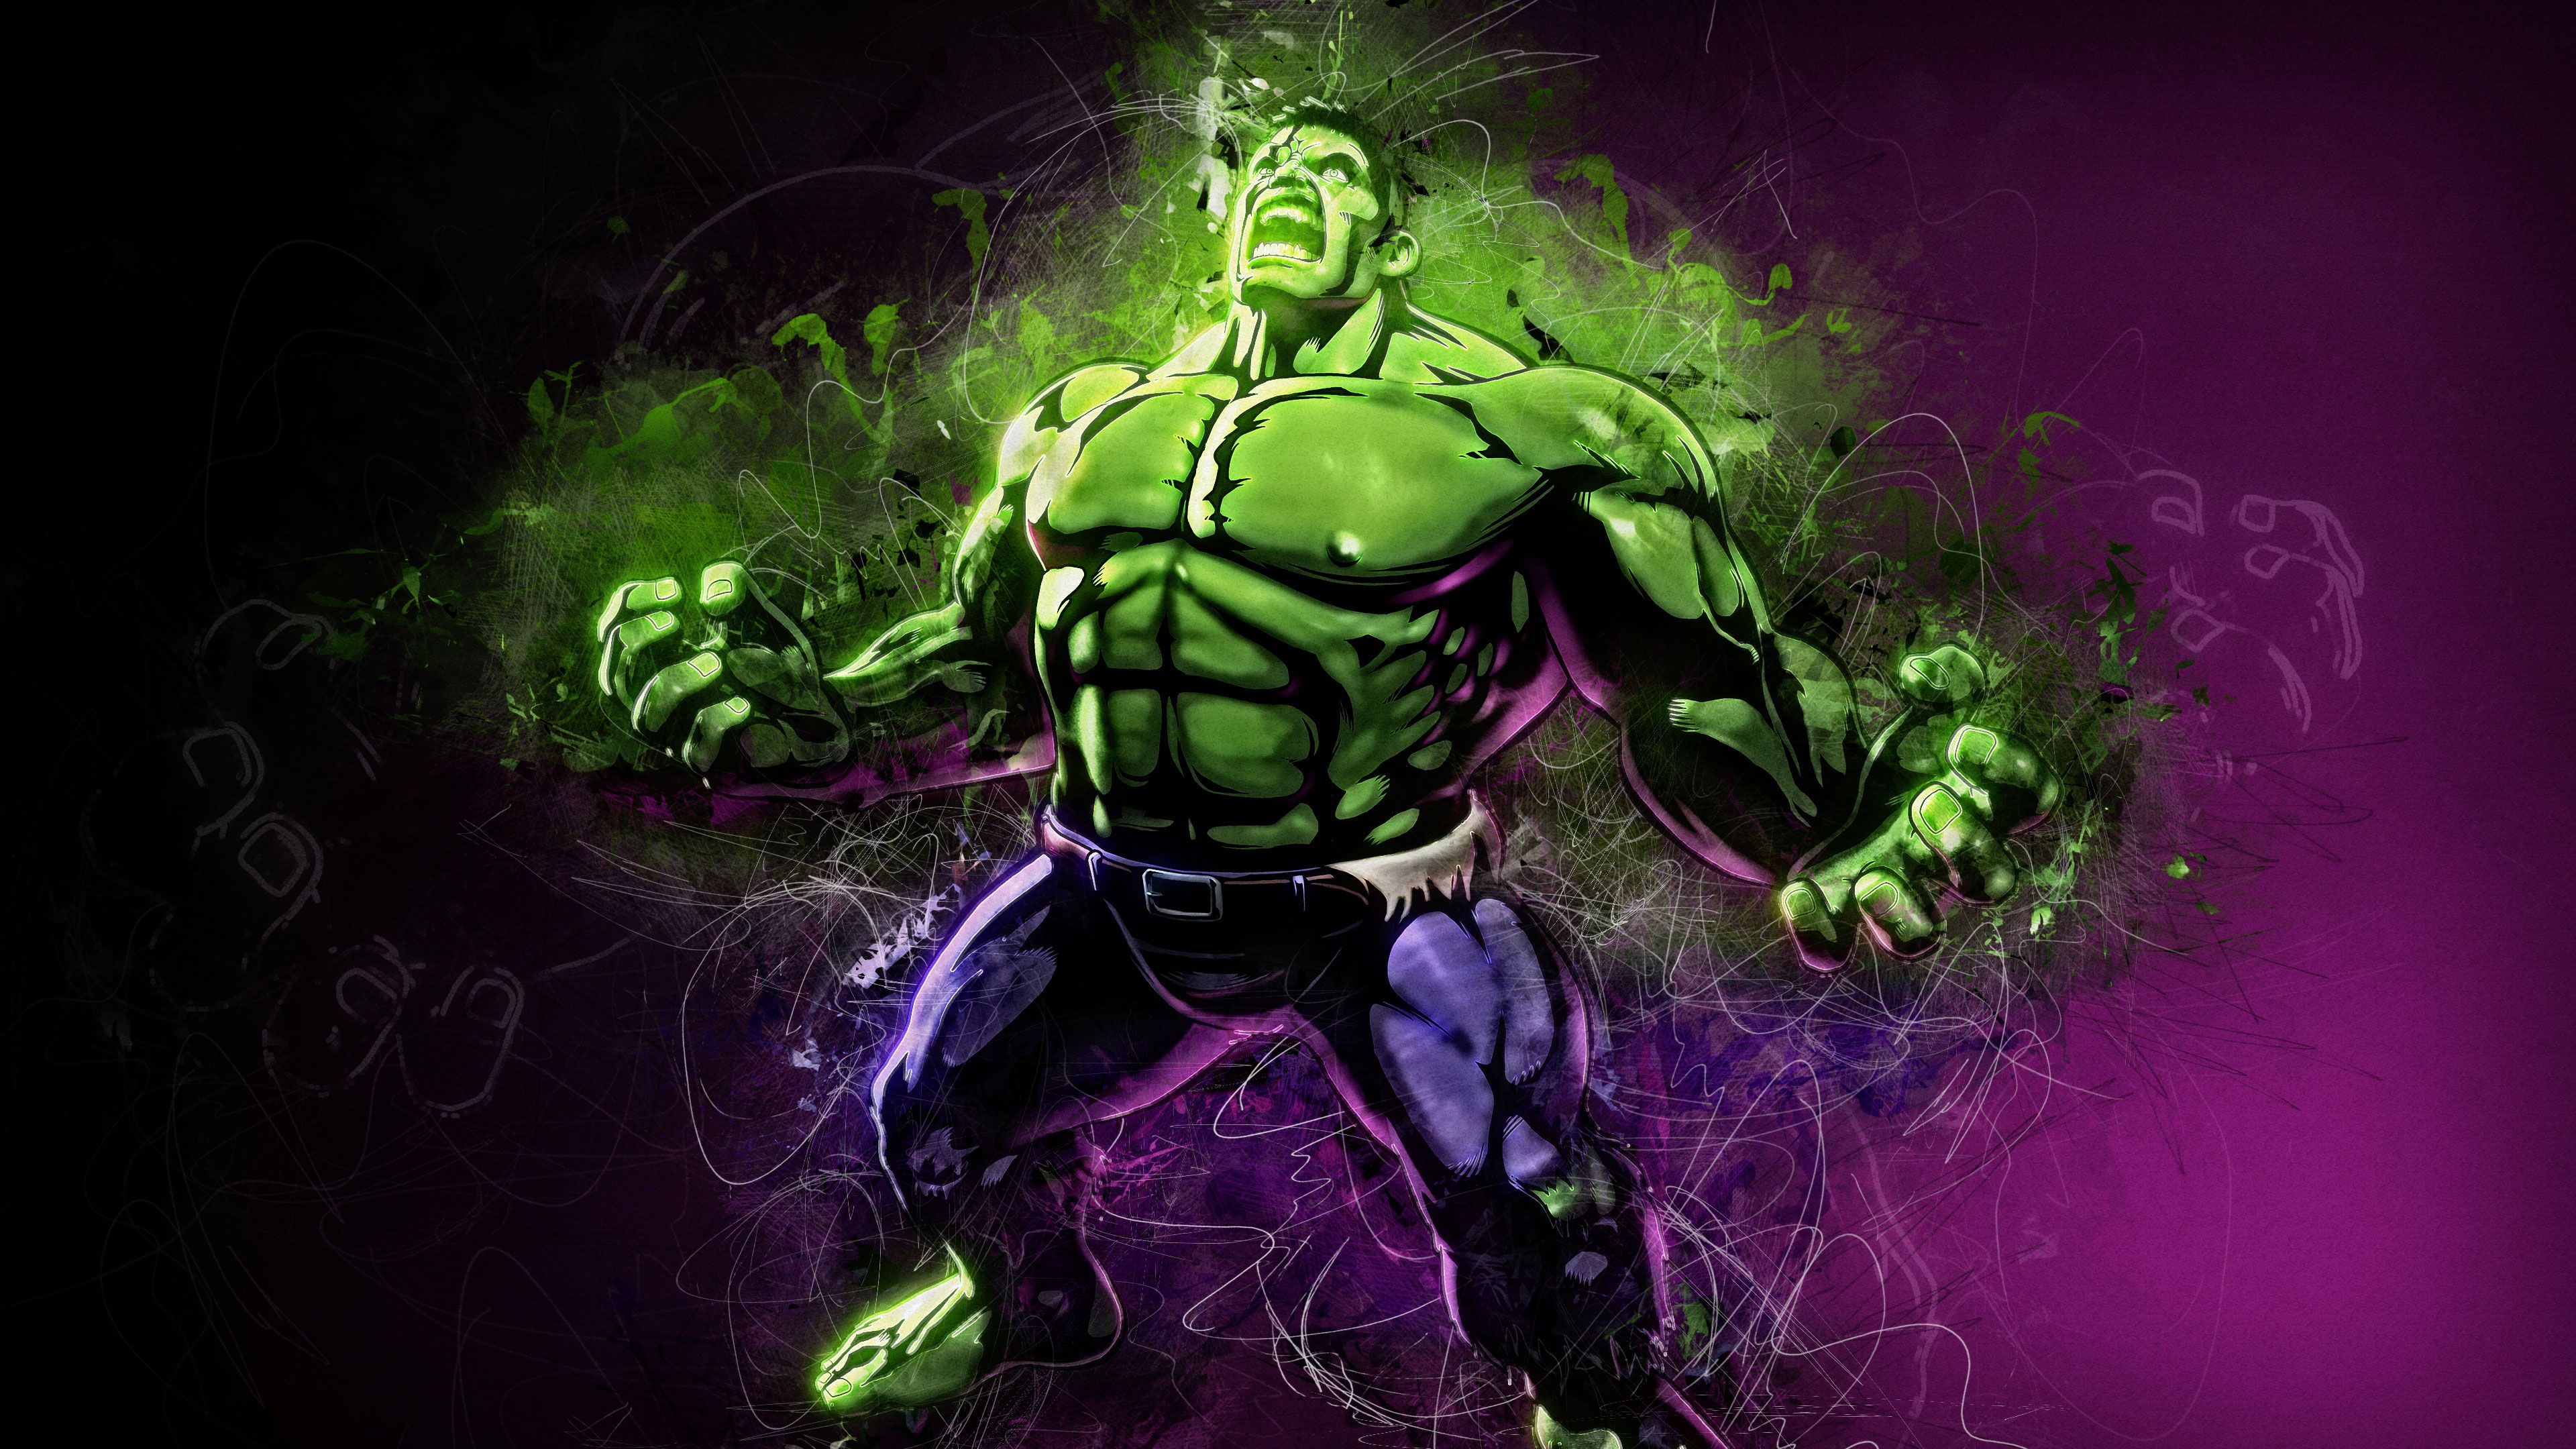 4K #artwork #Hulk. wallpaper. Hulk artwork, Artwork, Hulk